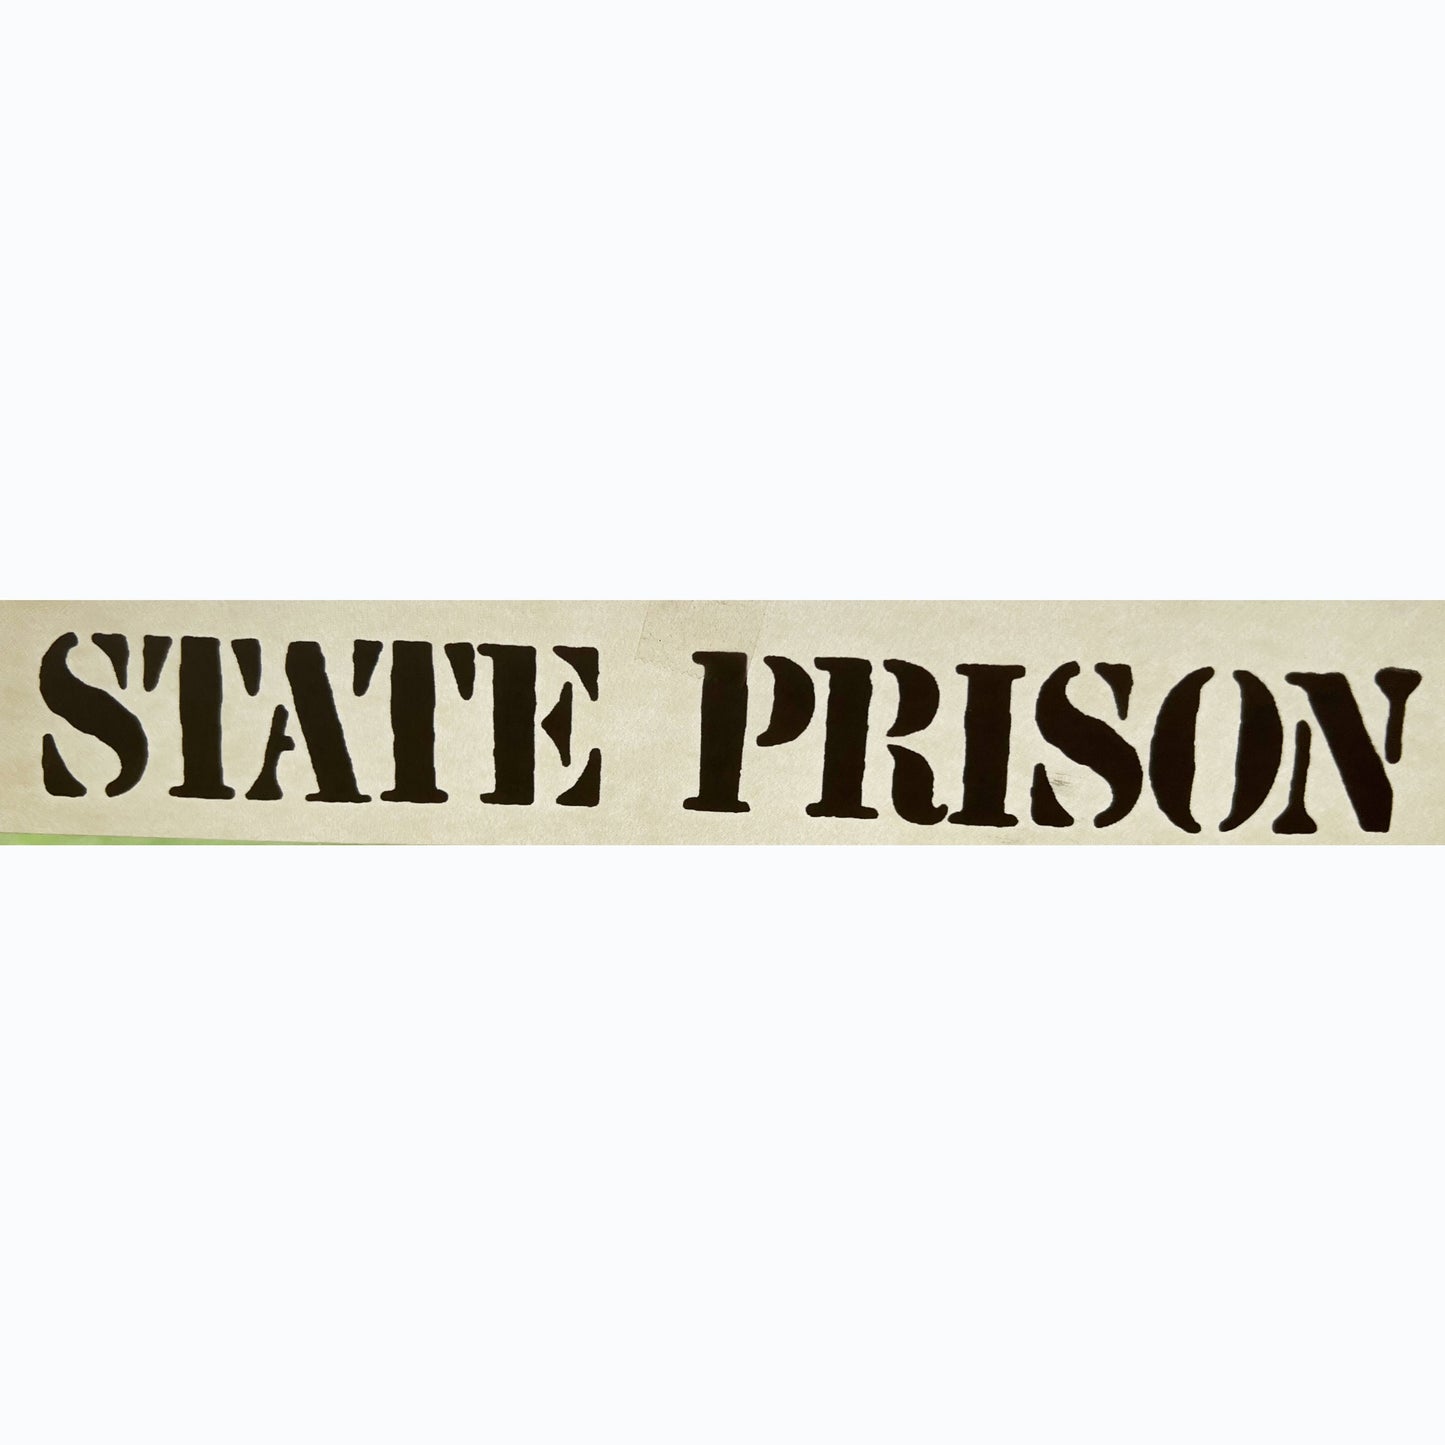 State Prison Vintage Iron On Heat Transfer